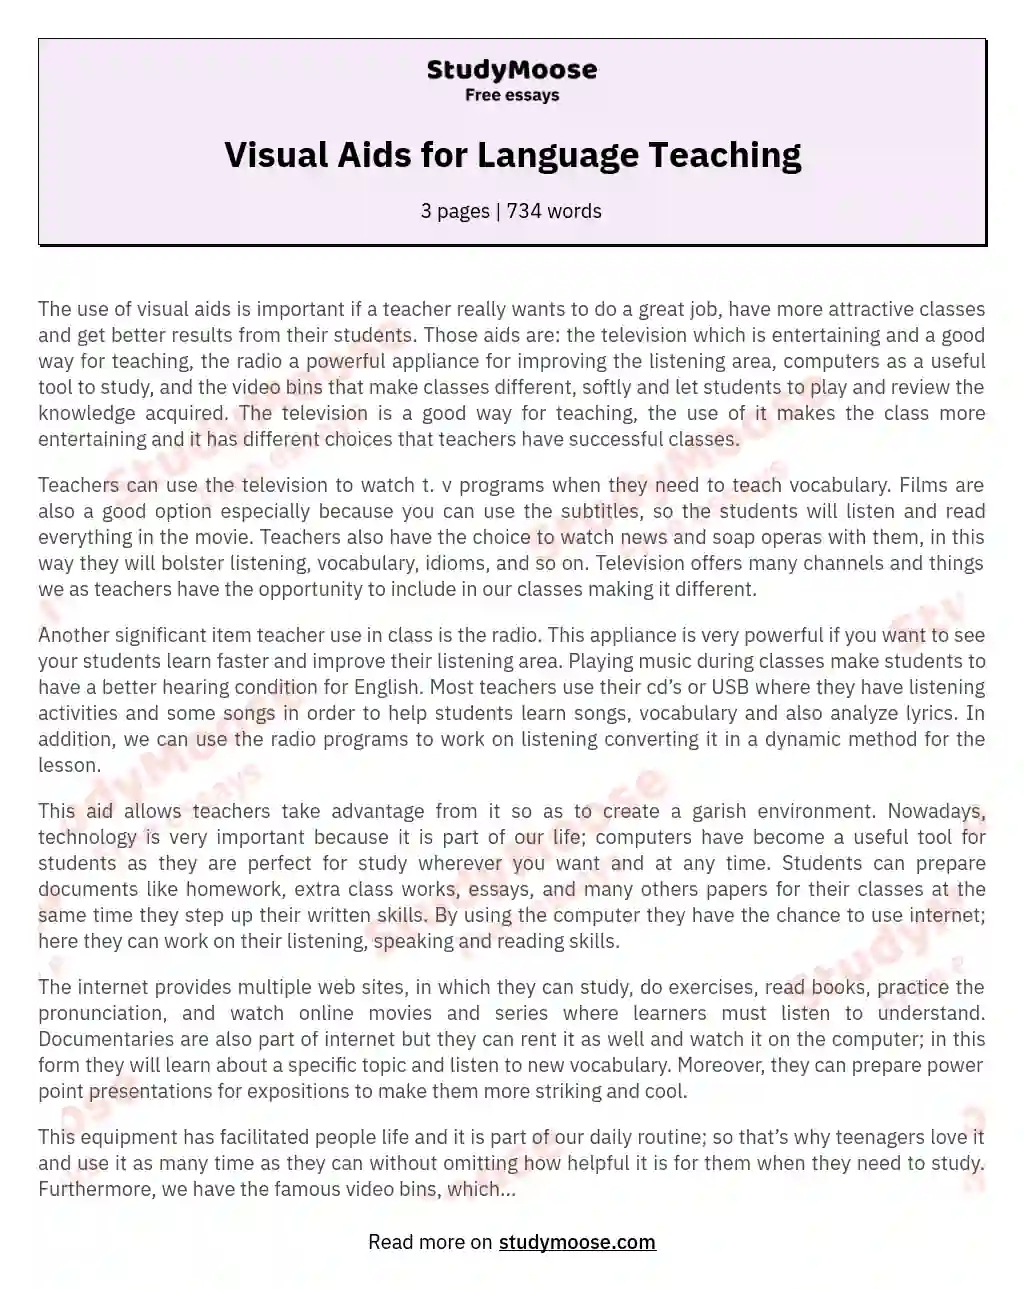 Visual Aids for Language Teaching essay